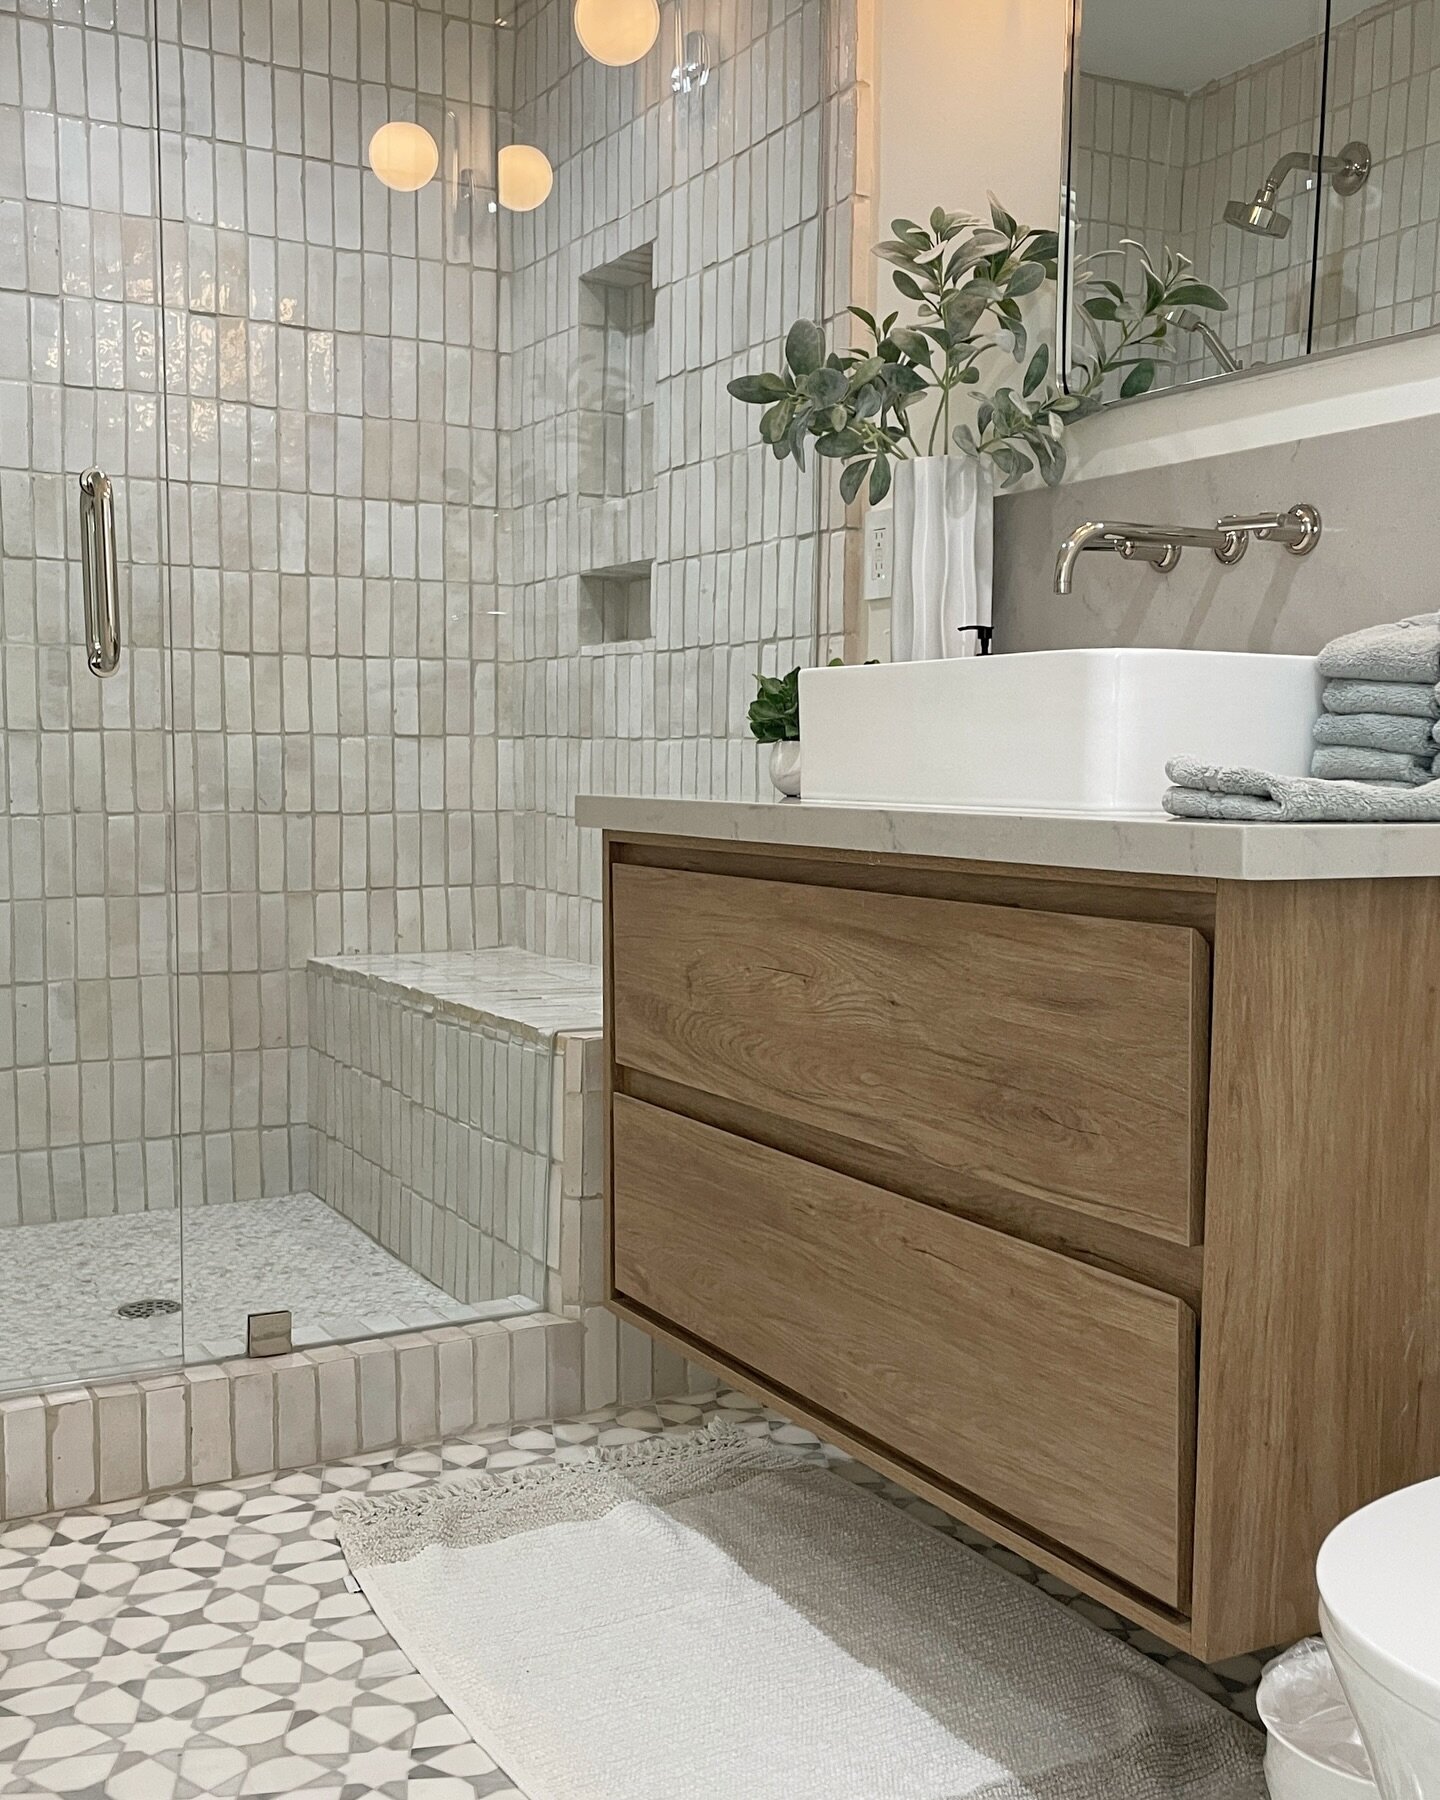 A simple setting in this space, and no the showerhead is not installed above the vanity 🙂. #multitasking #bathroomsofinstagram #bathroomsofinsta #modernbathroom #zellige #zelligetiles #cletile @cletile